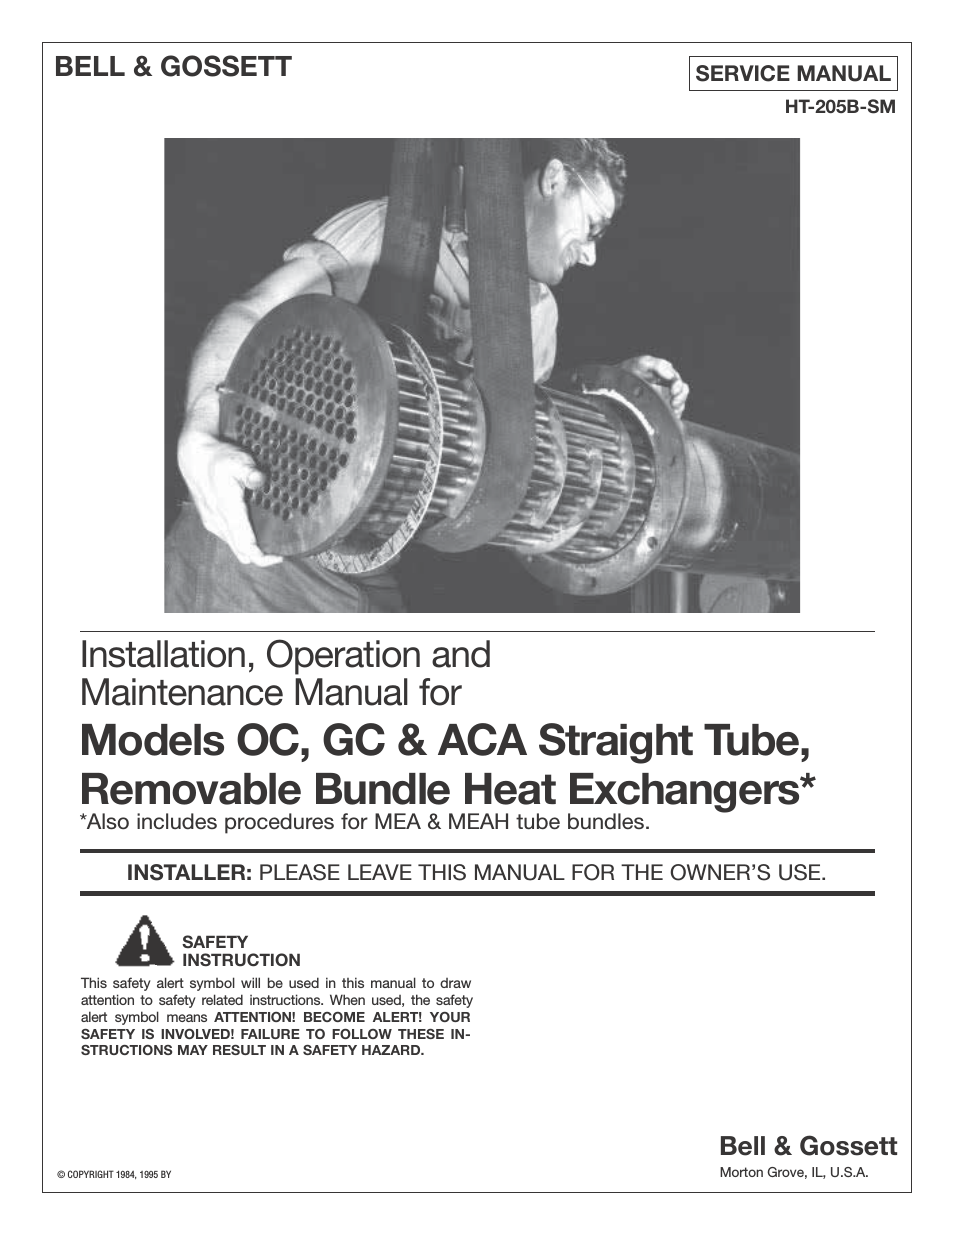 HT 205B SM Models GC Straight Tube, Removable Bundle Heat Exchangers